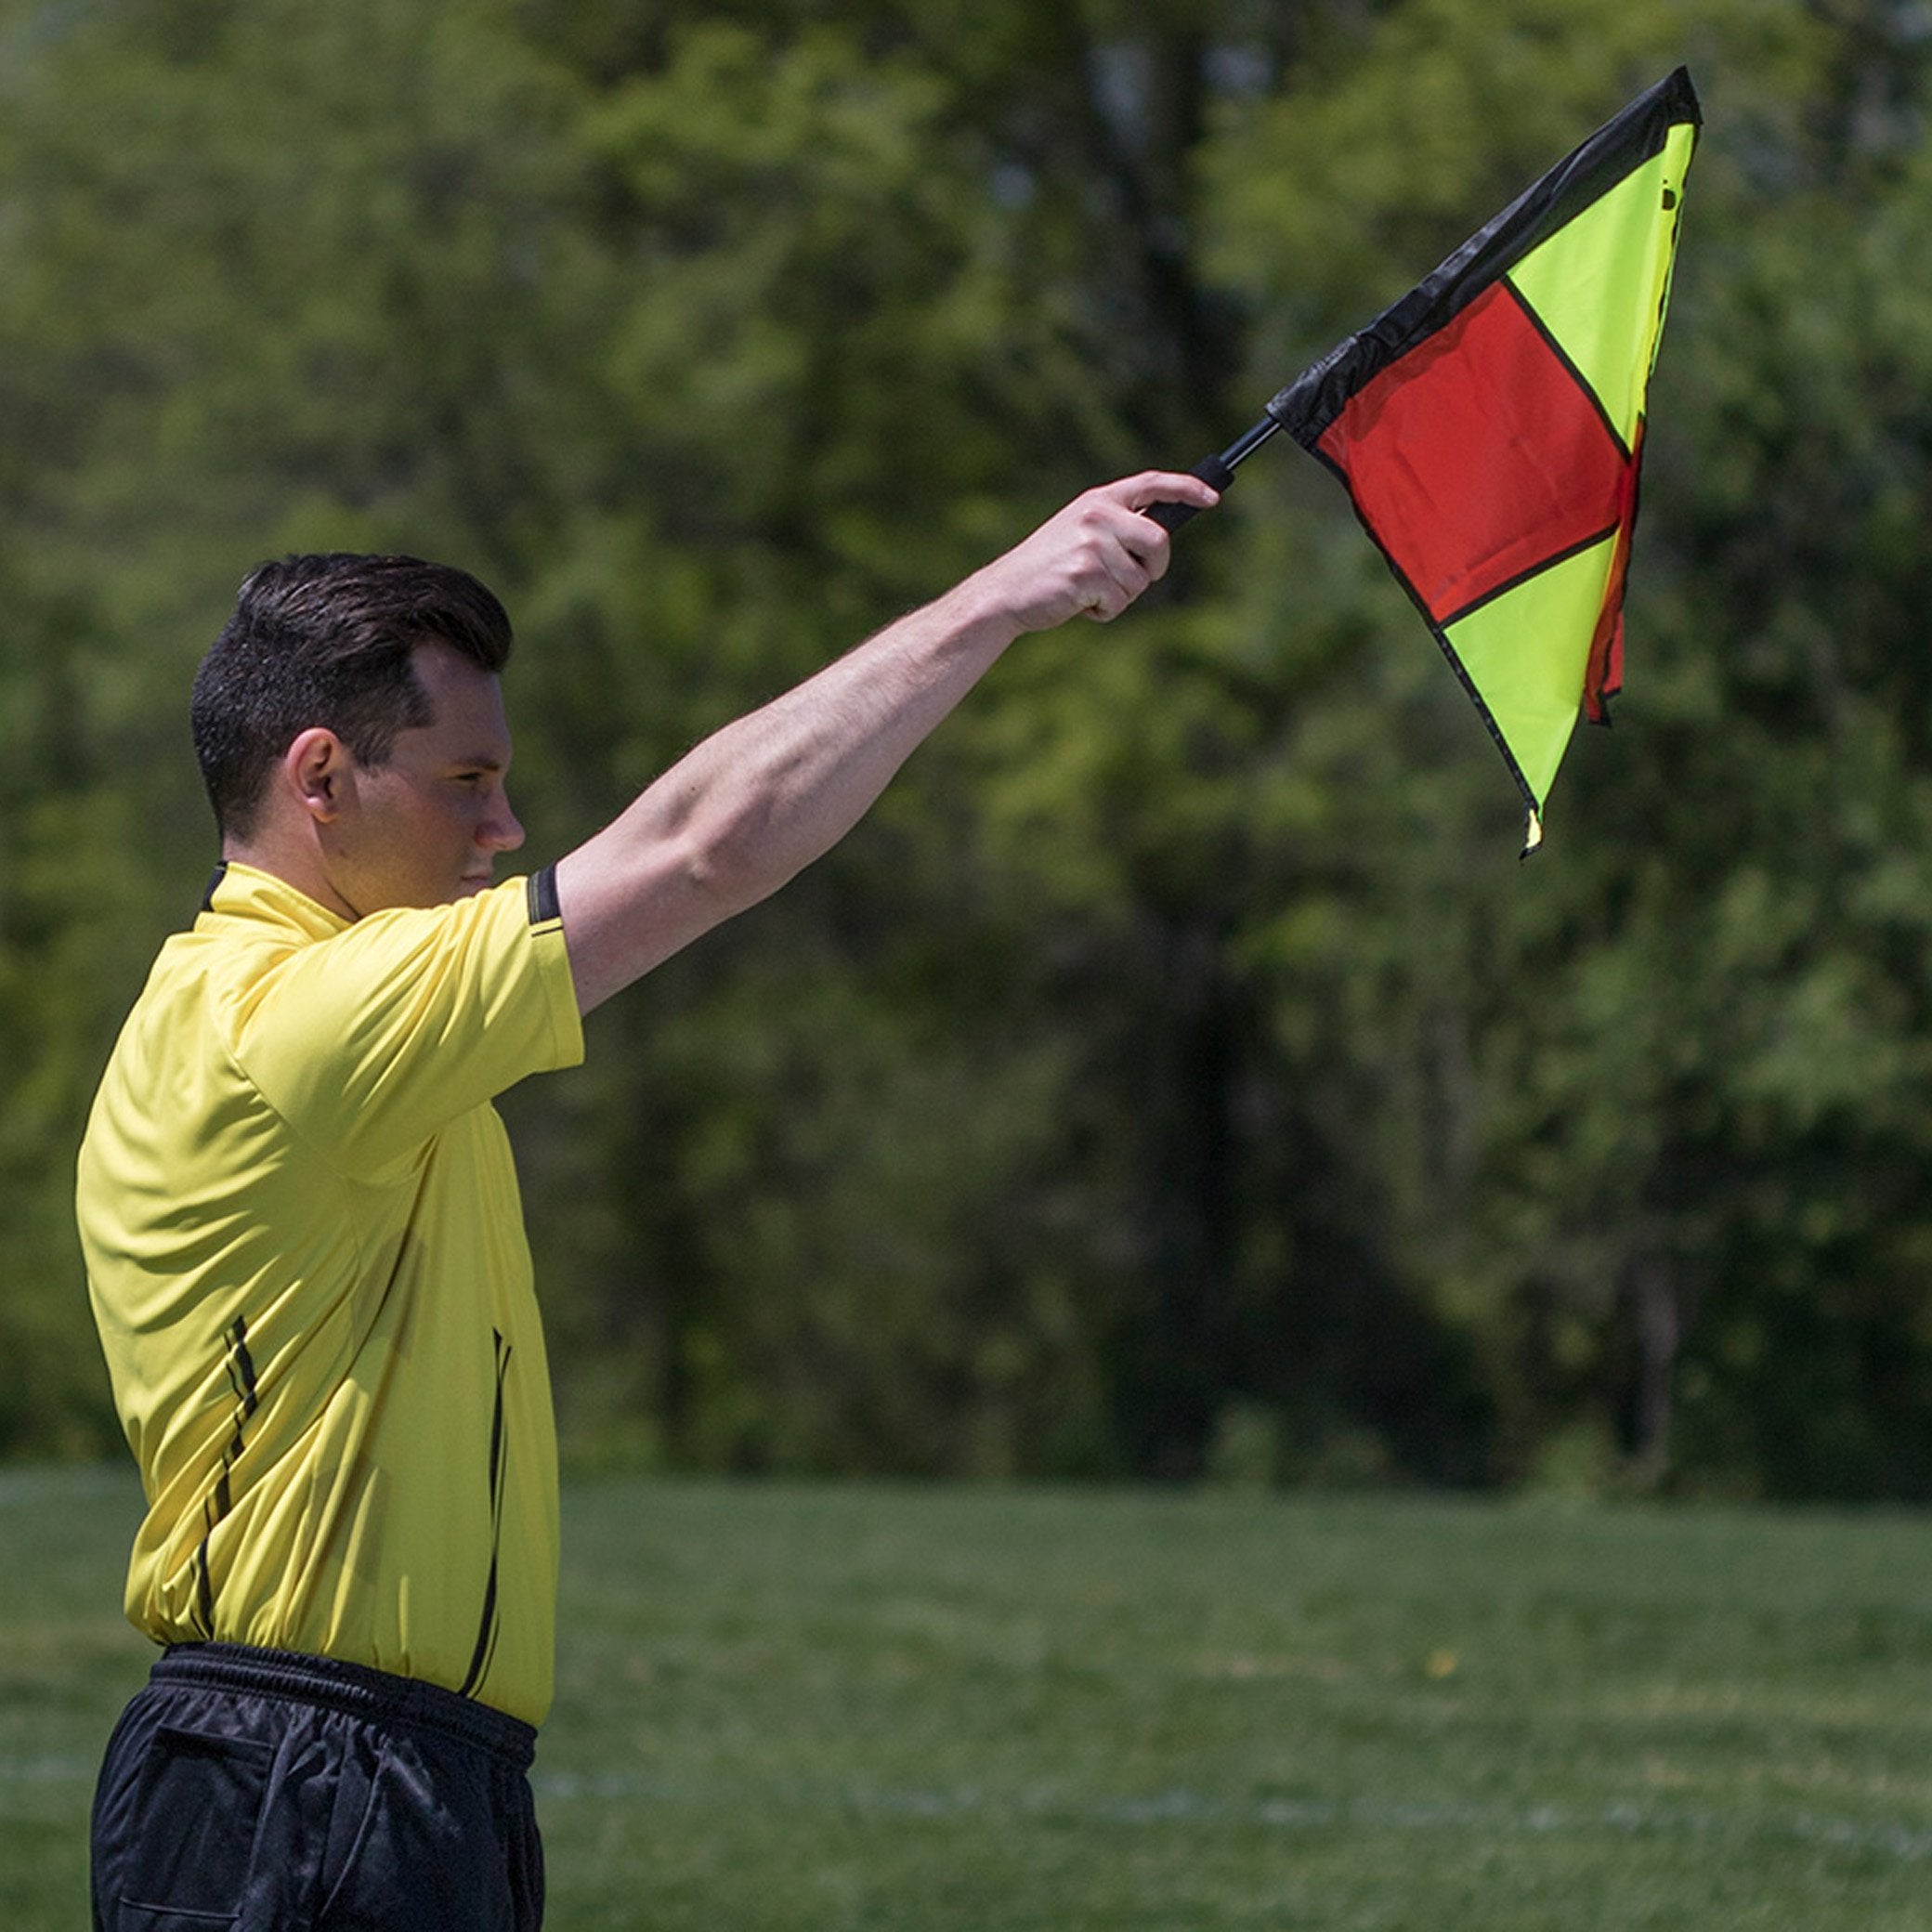  Kwik Goal Official Referee Jersey, Hi-Vis Yellow